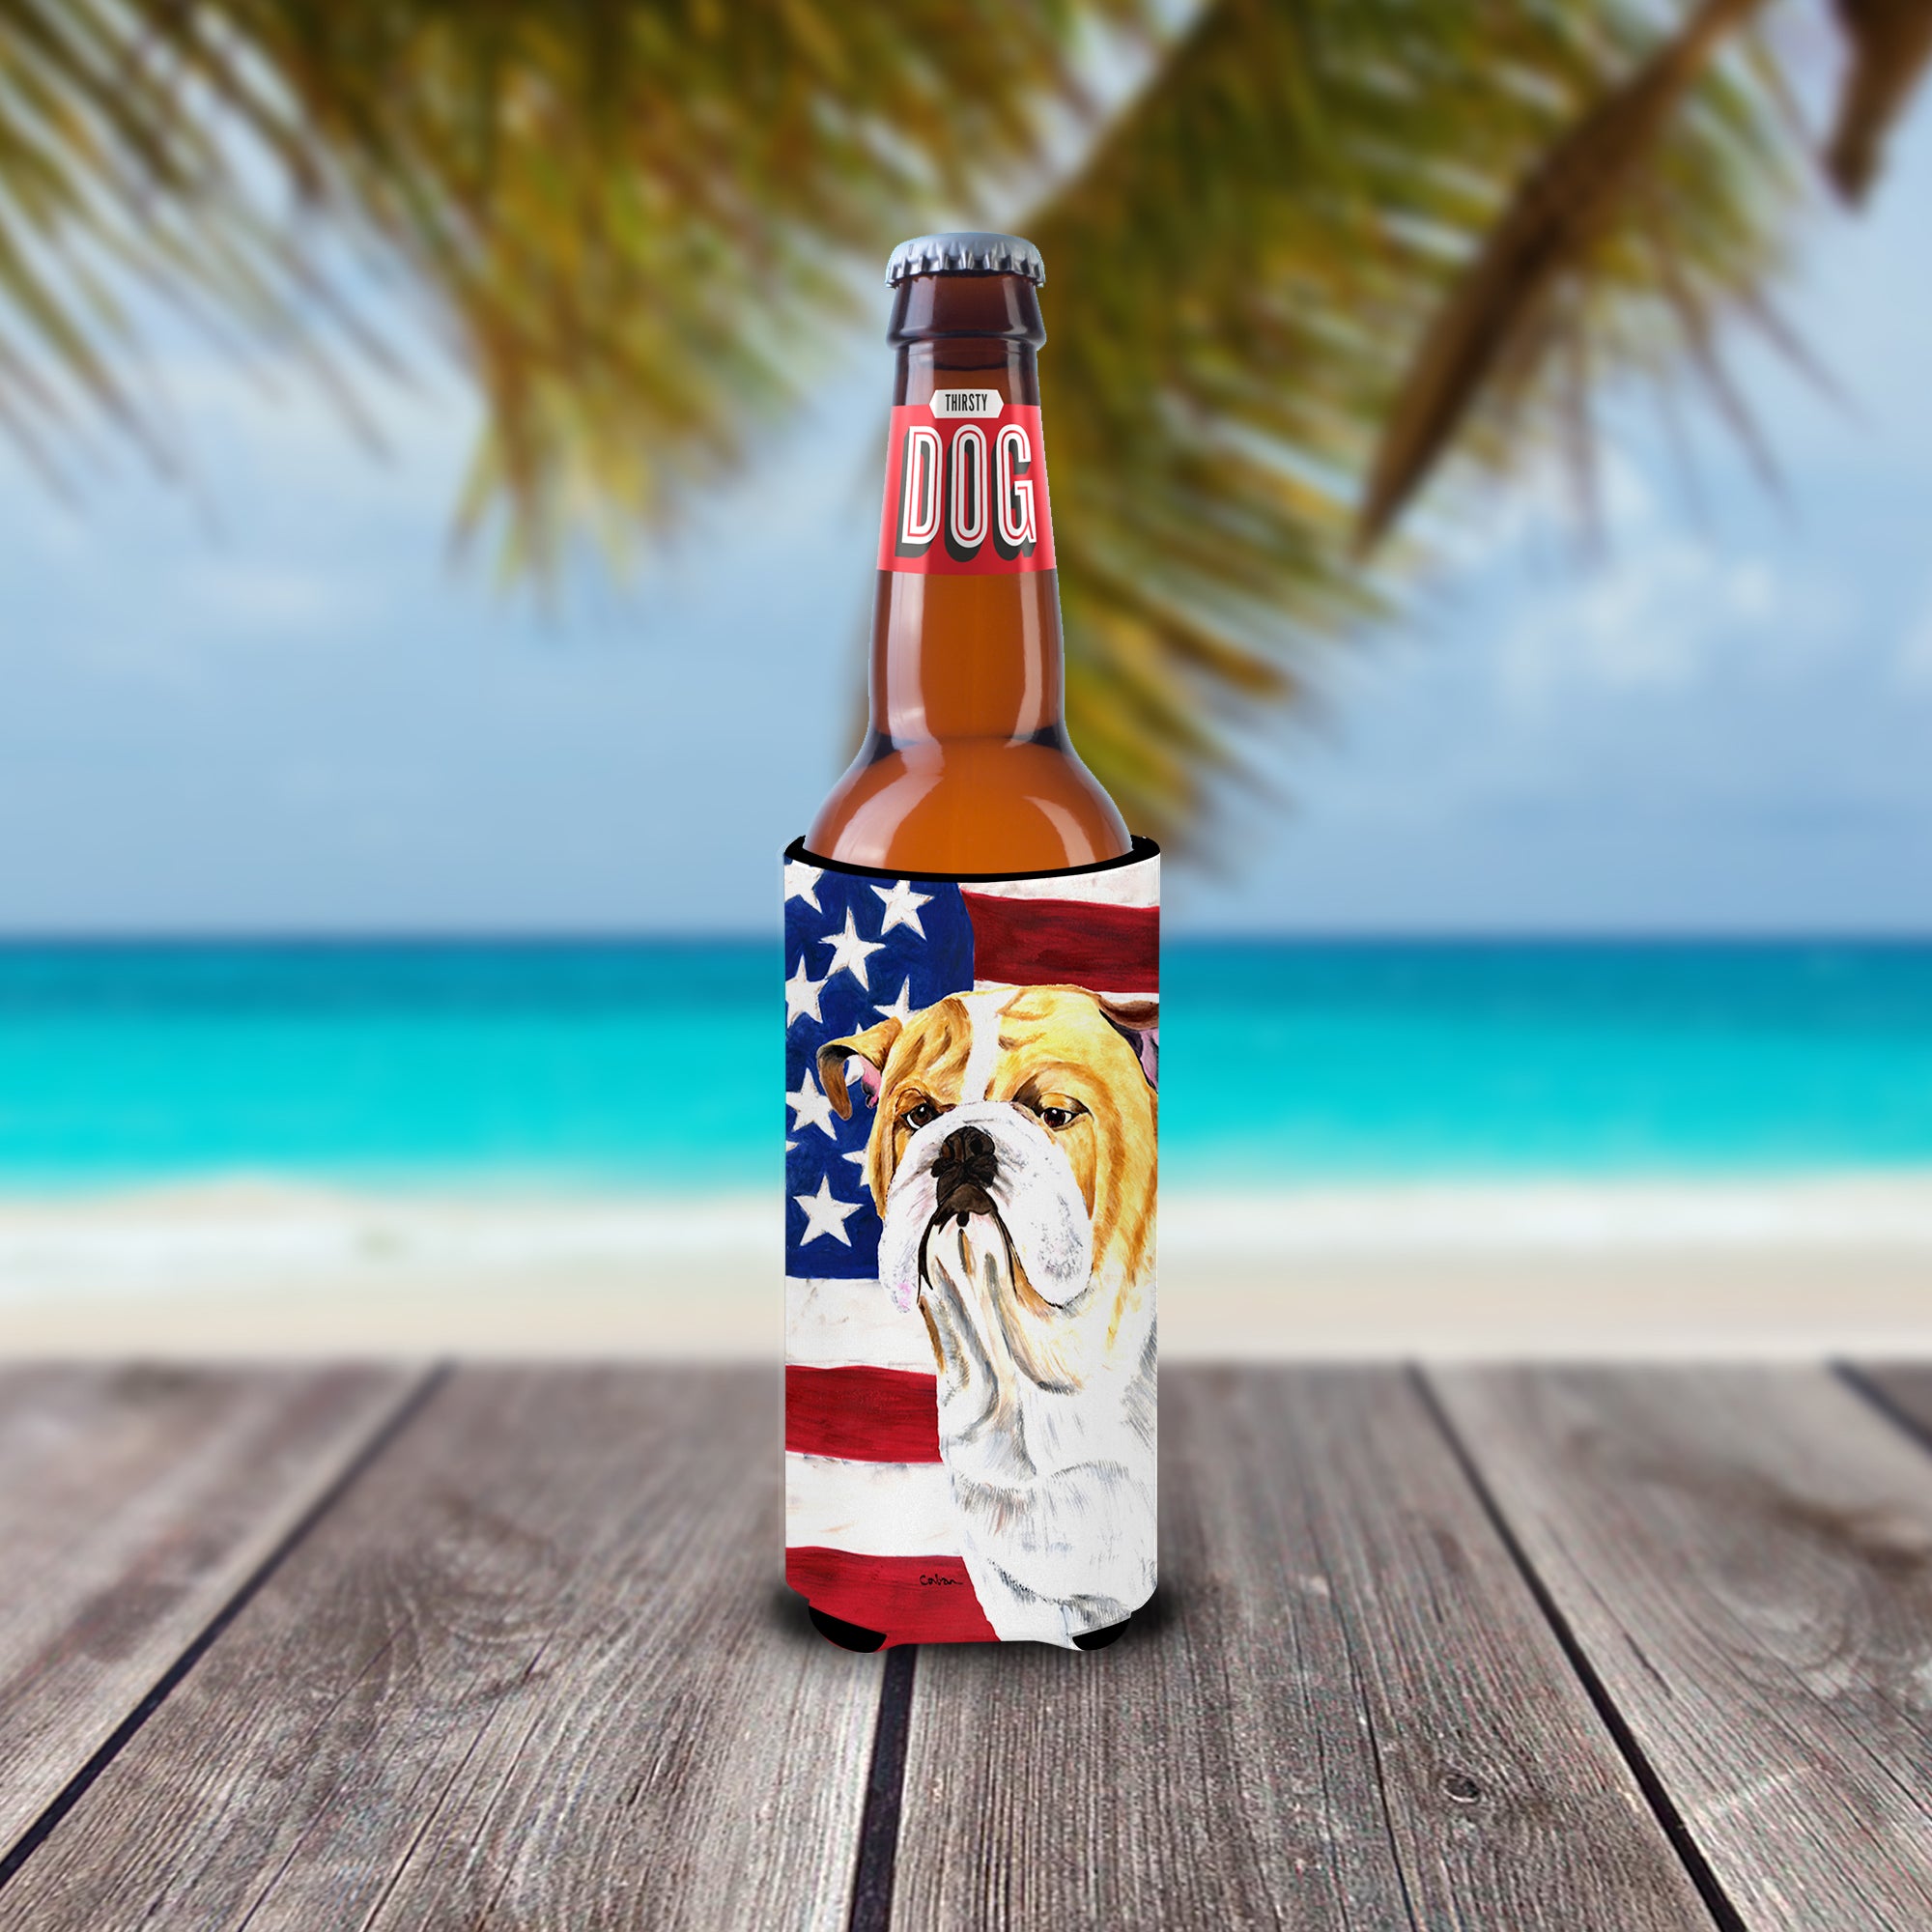 USA American Flag avec Bulldog English Ultra Beverage Isolateurs pour canettes minces SC9002MUK